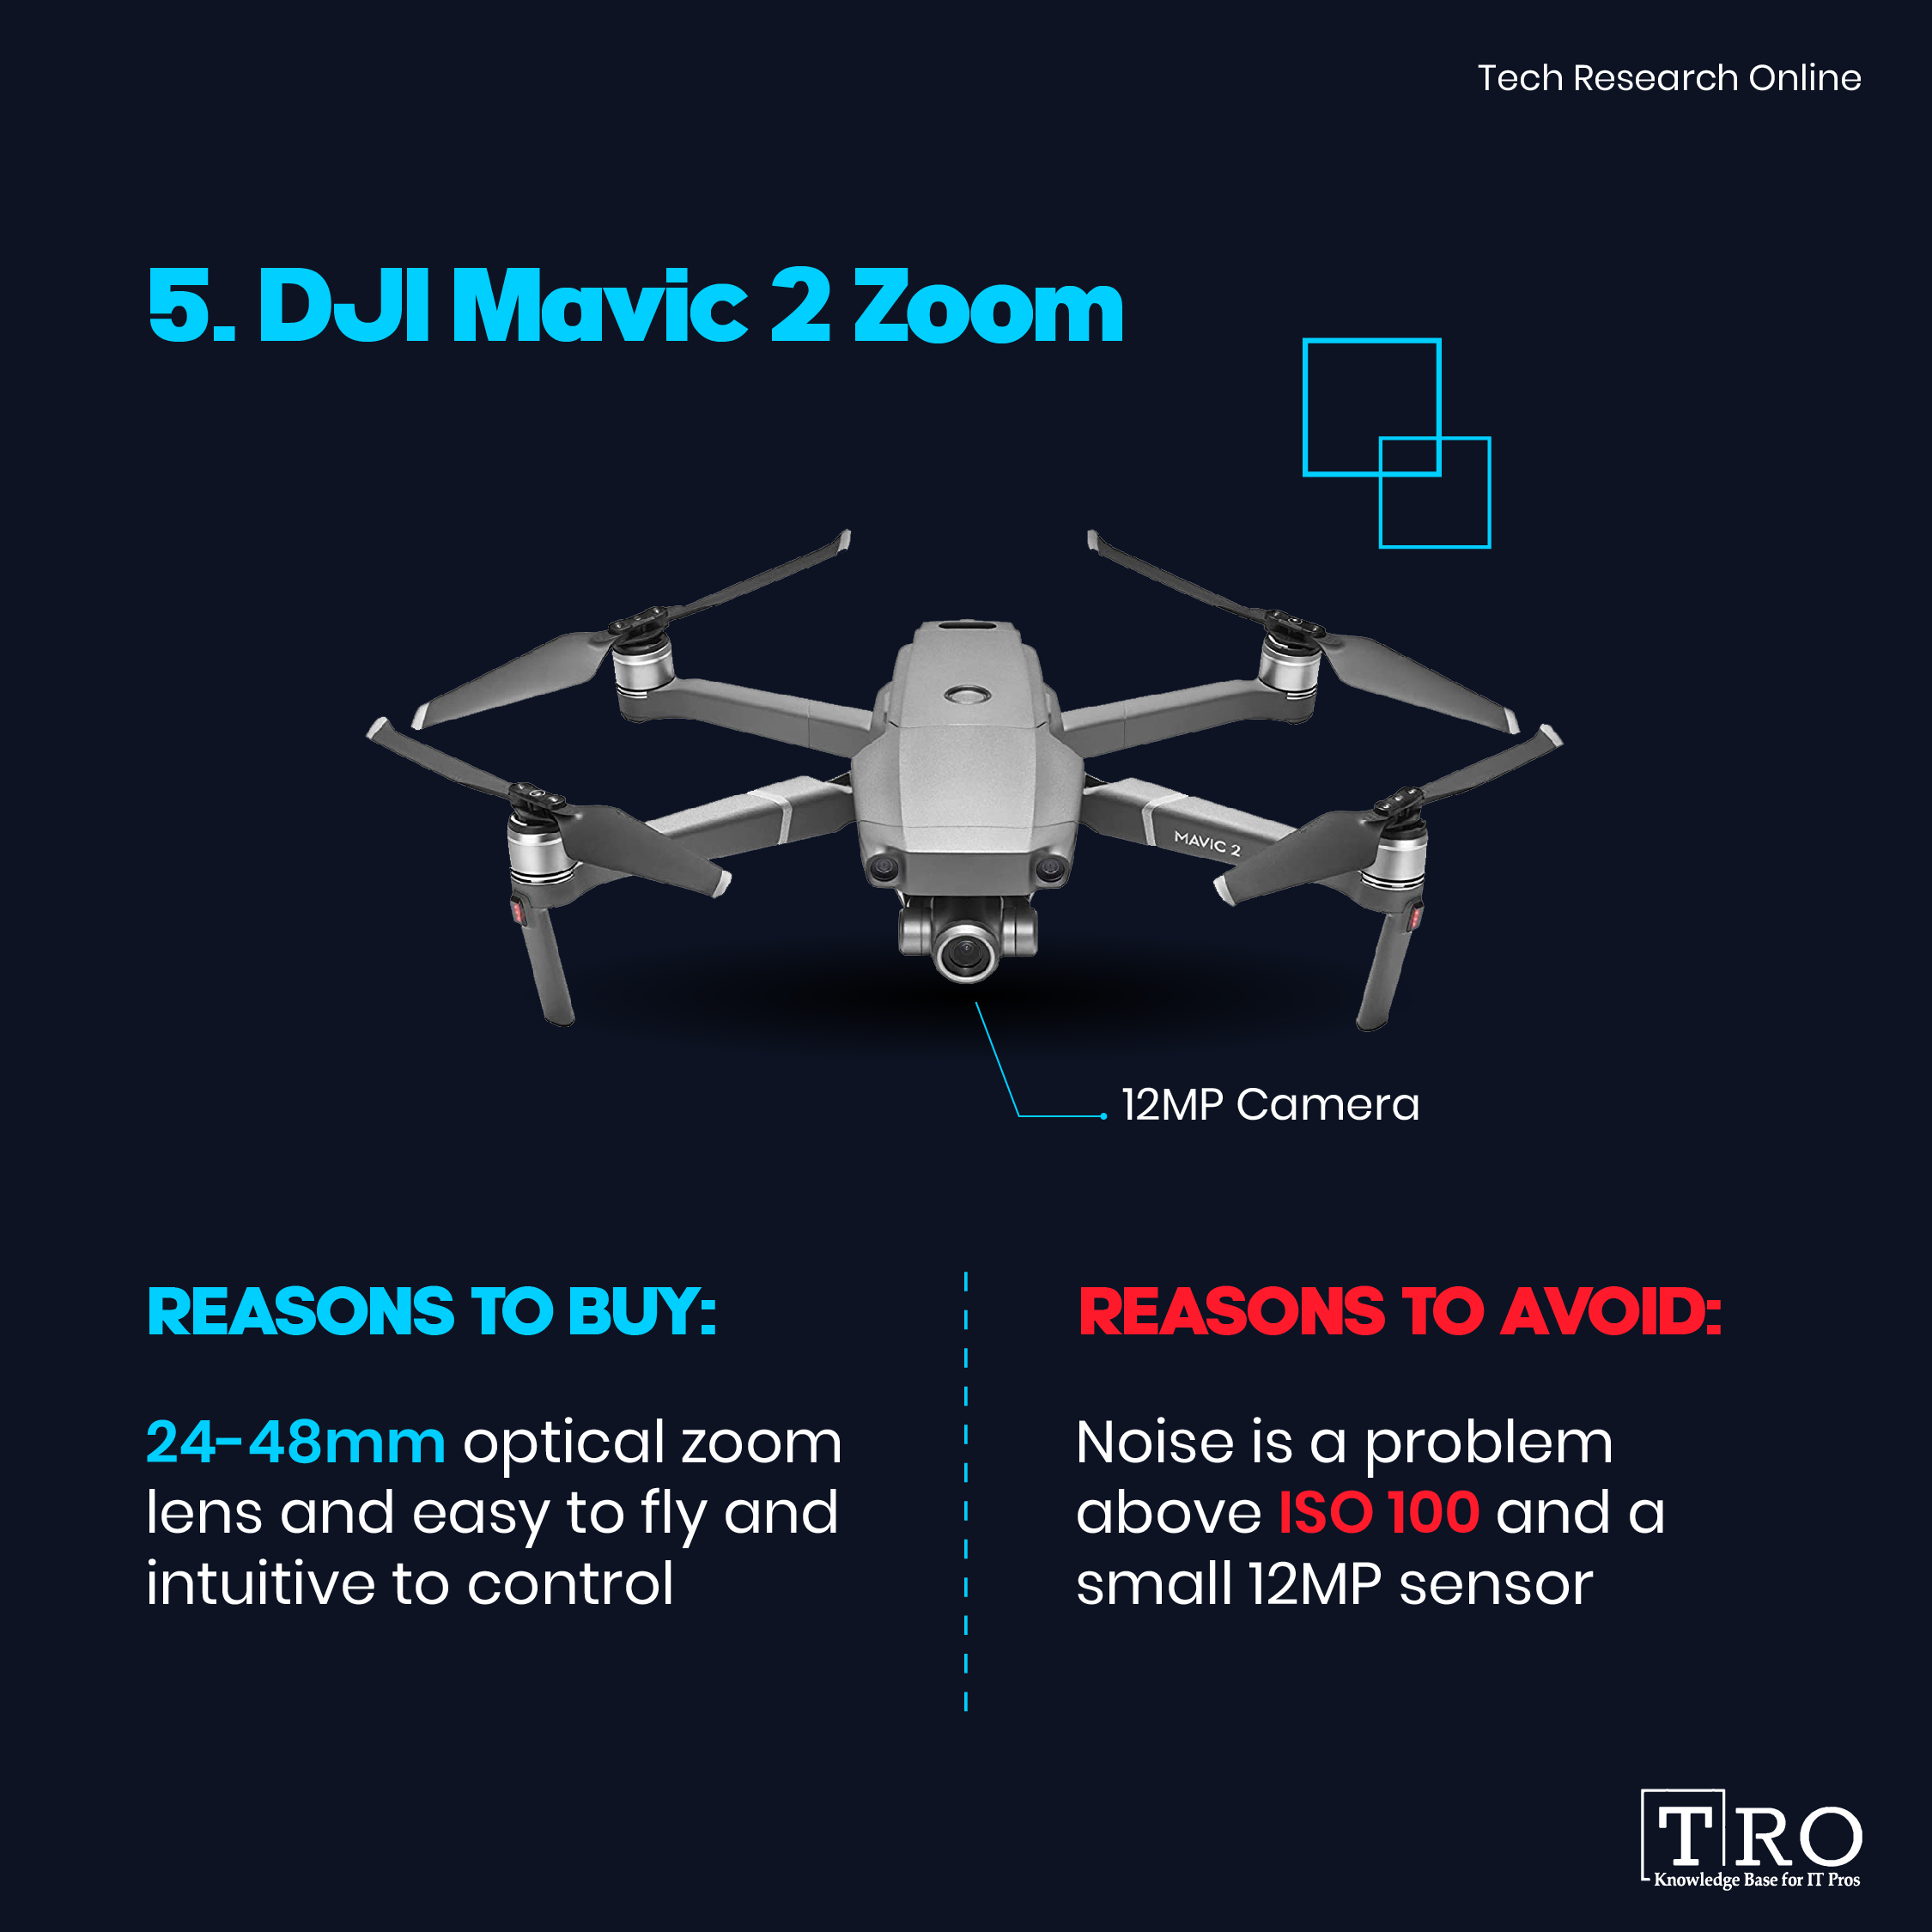 DJI Mavic 2 Zoom flying drone